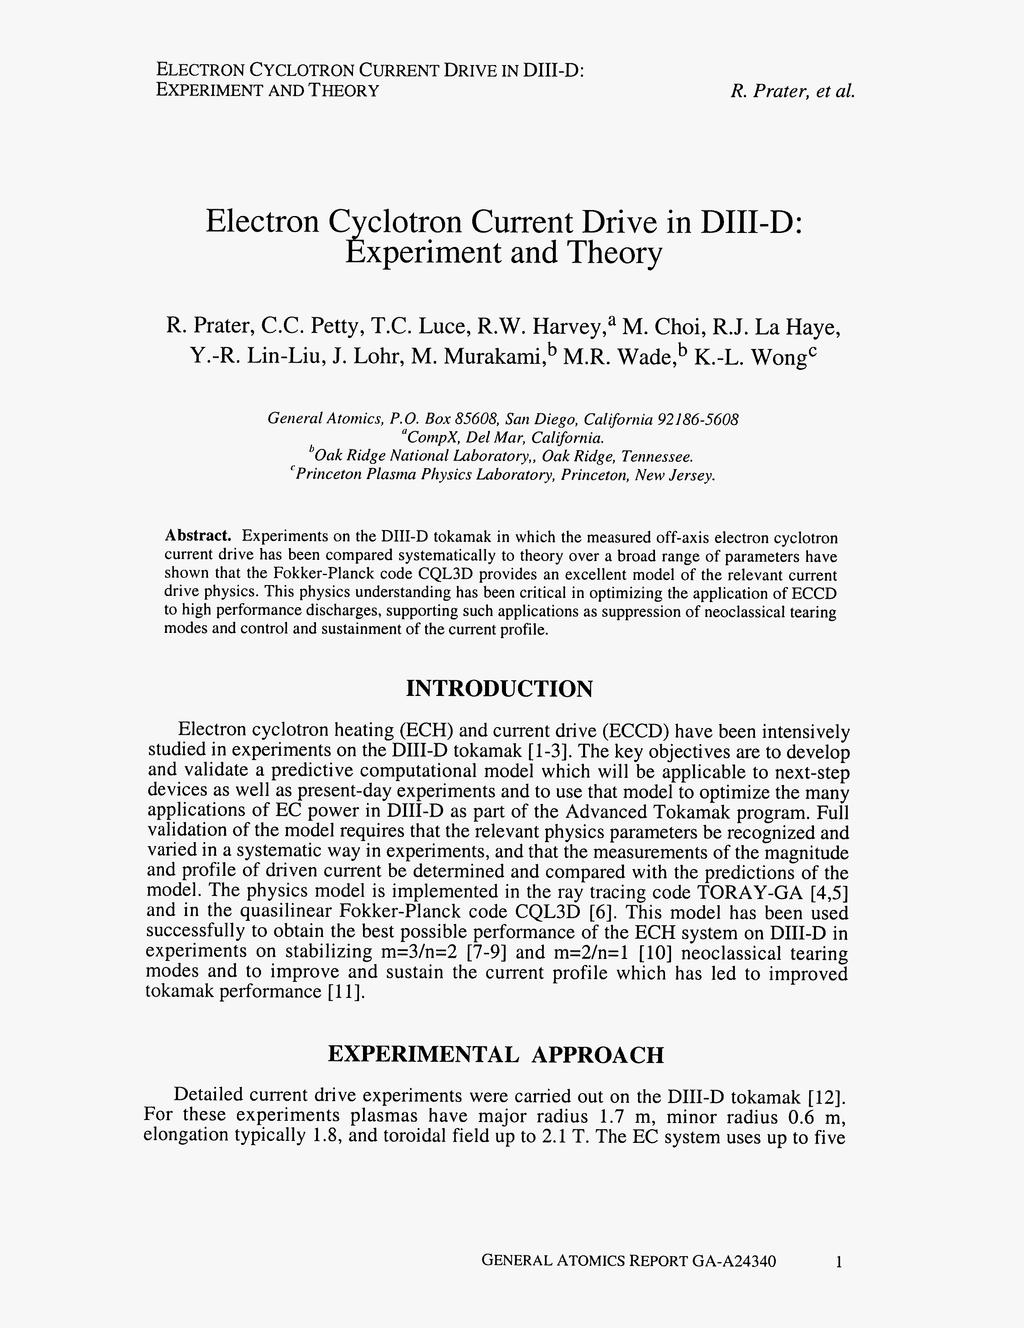 ELECTRON CYCLOTRON CURRENT DRVEN D-D: EXPERMENT AND THEORY Electron Cyclotron Current Drive in D-D: fixperiment and Theory R. Prater, C.C. Petty, T.C. Luce, R.W. Harvey,a M. Choi, R.J. La Haye, Y.-R.